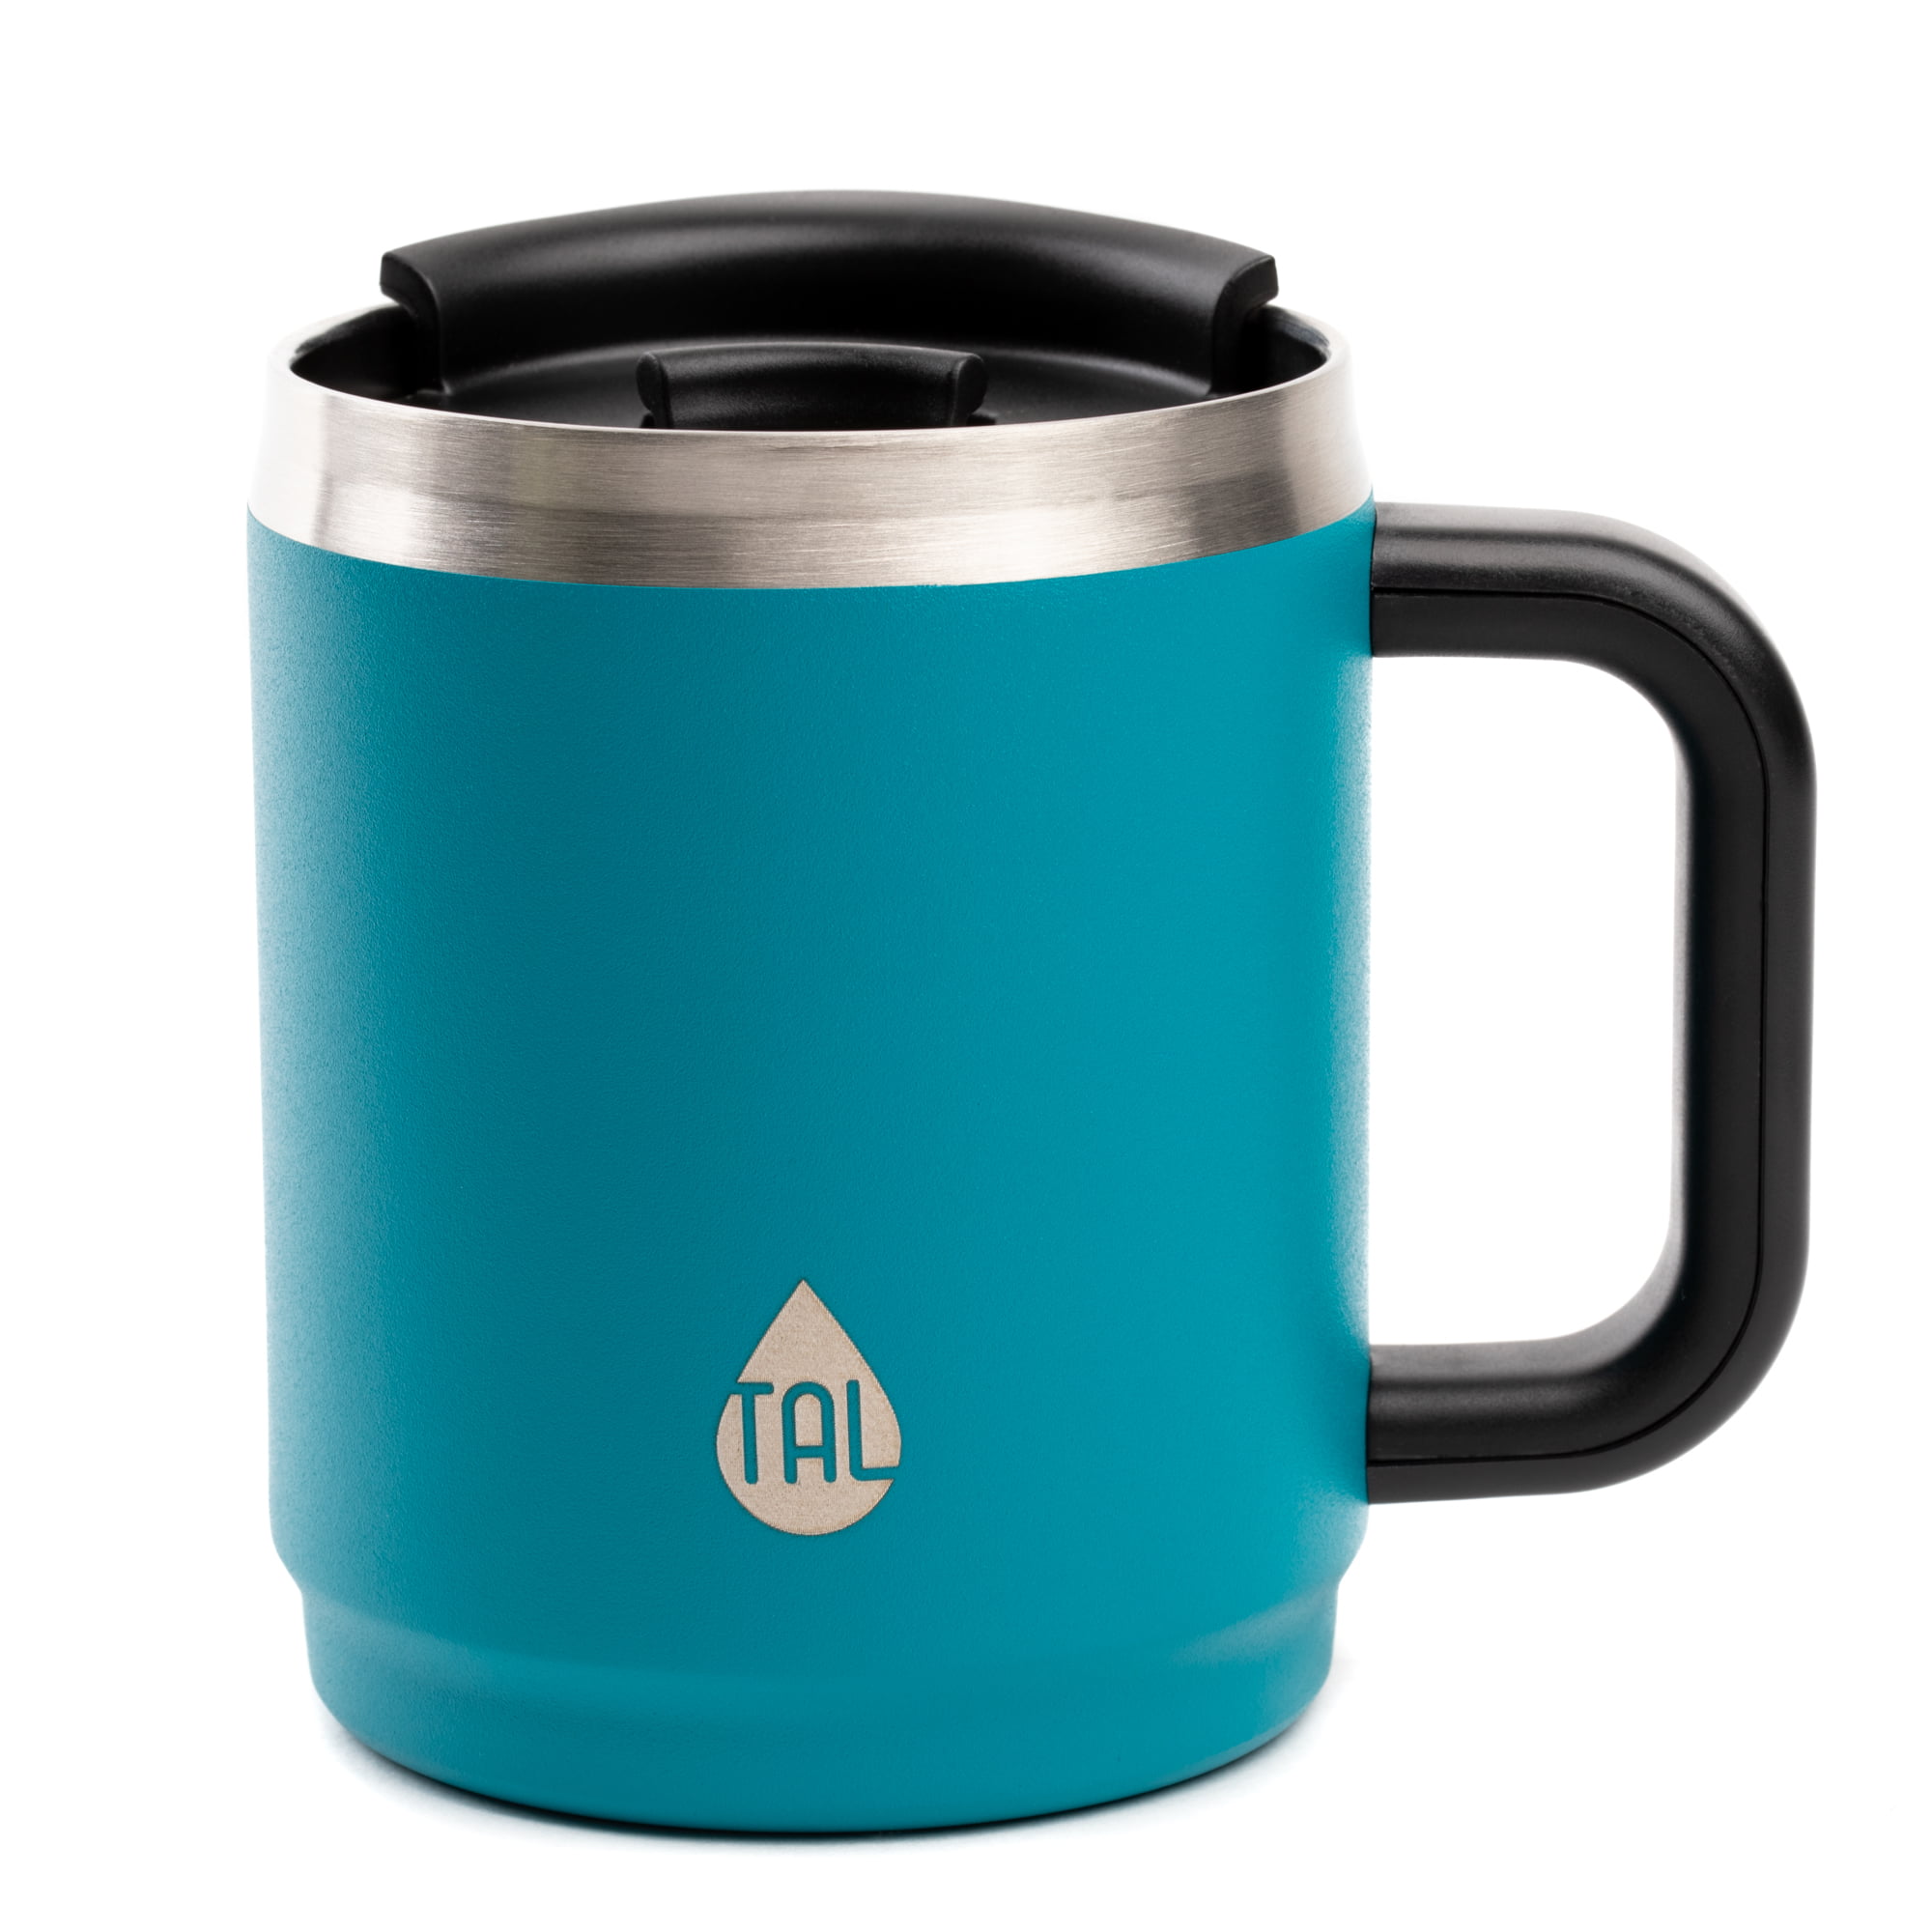 TAL Stainless Steel Brew Coffee Mug 15 fl oz, Sage